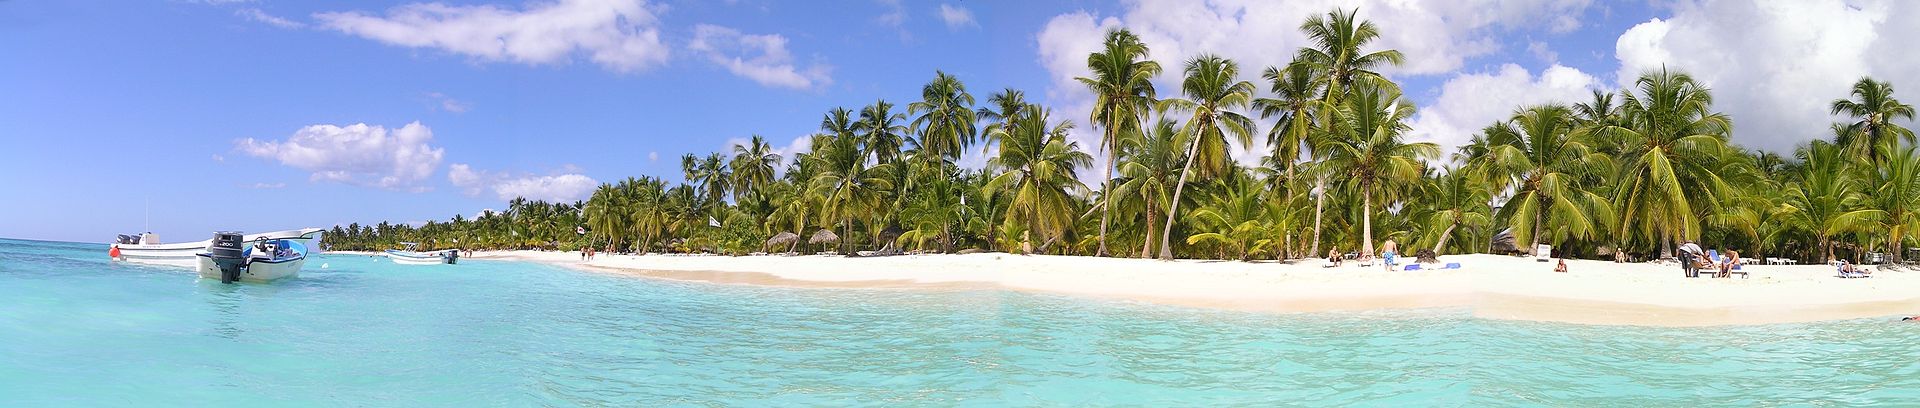 Alica Mckenna-Johnson, tropical beach, vacation dreams 